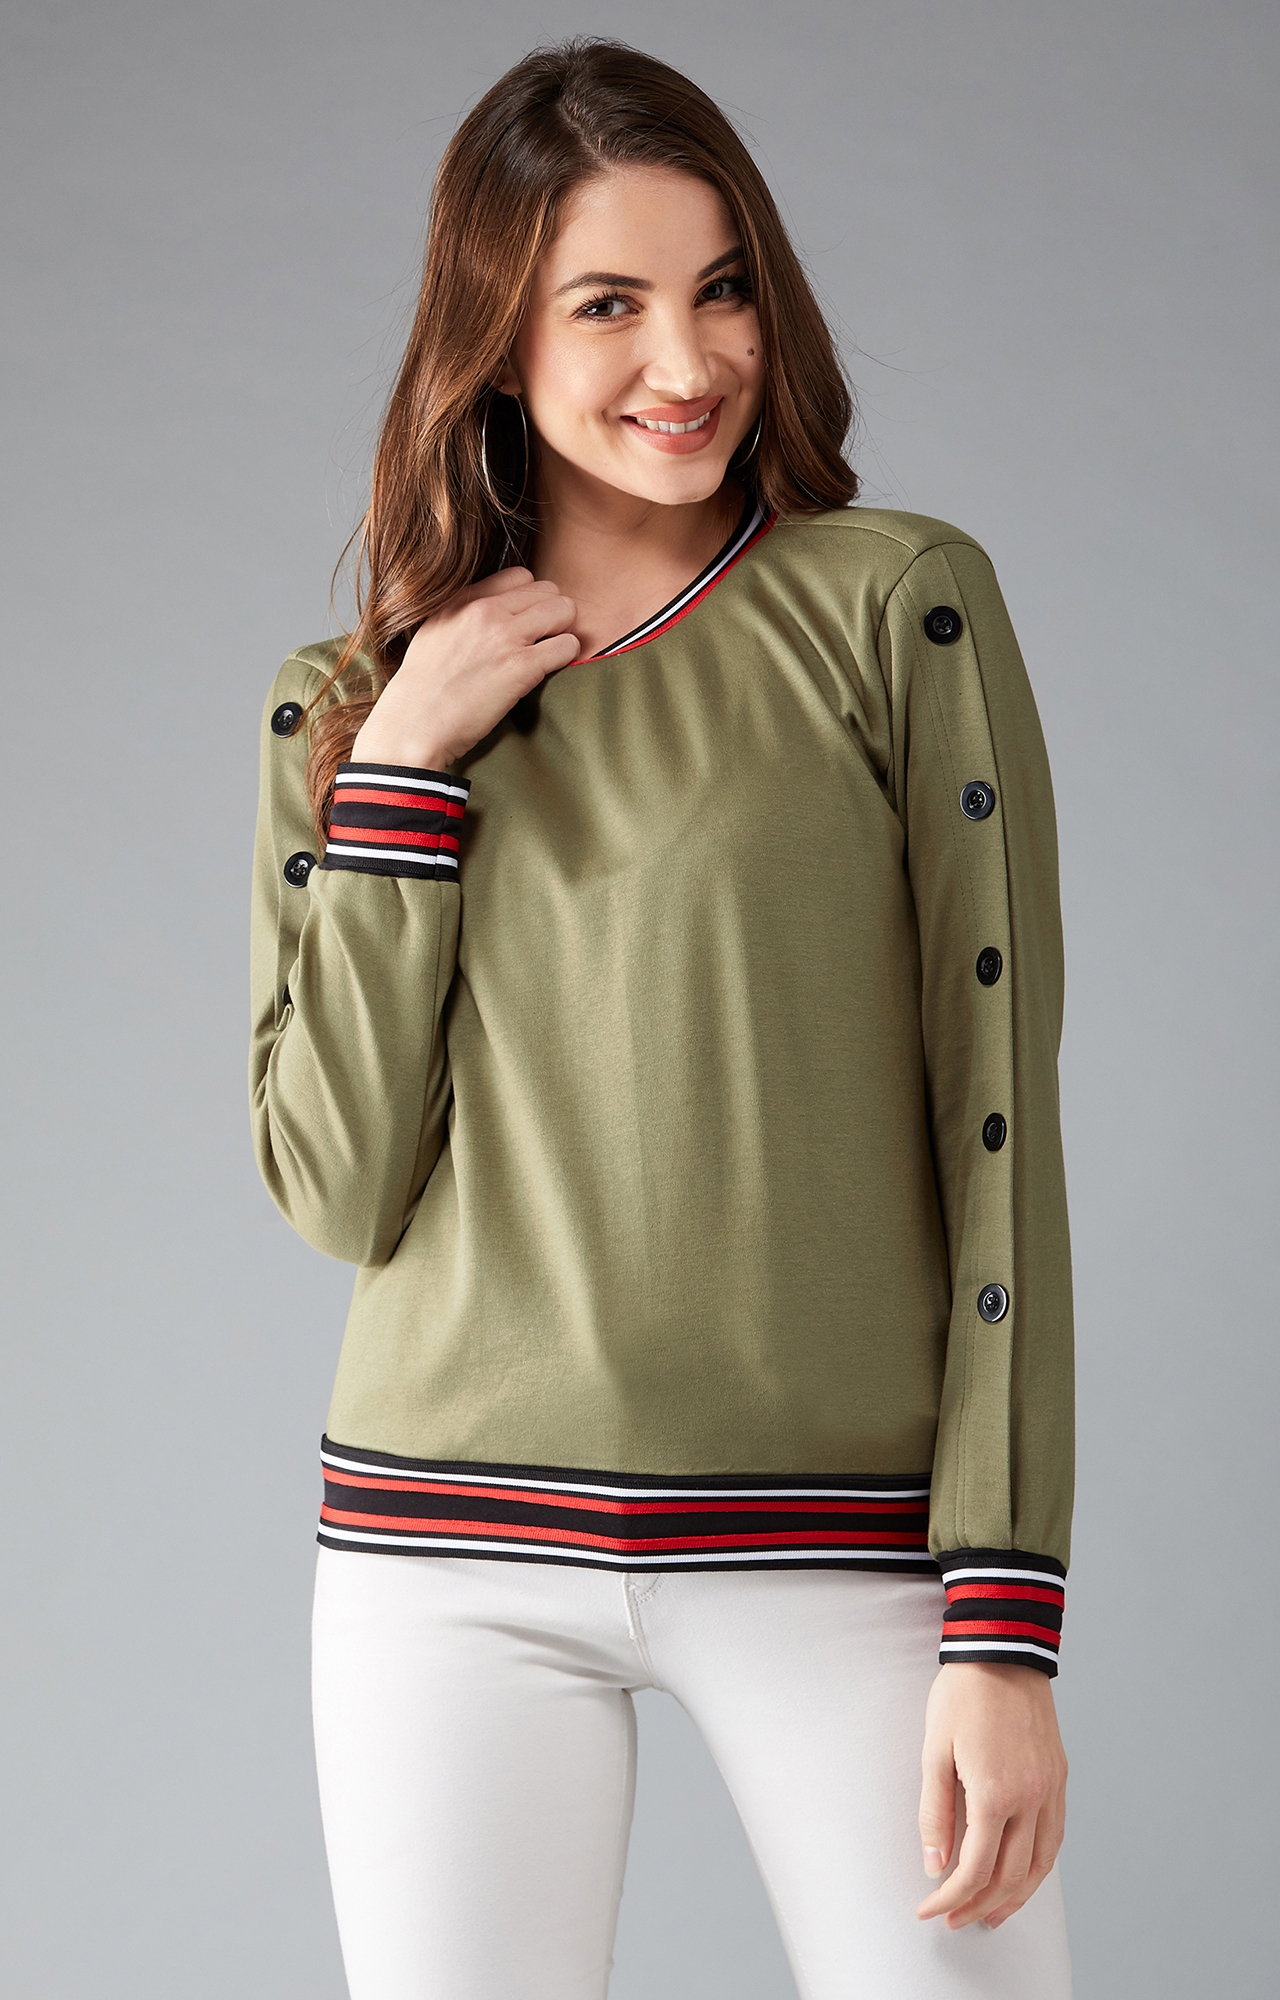 Dolce Crudo | Hotline Bling Buttoned Sleeve Sweatshirt Olive Green